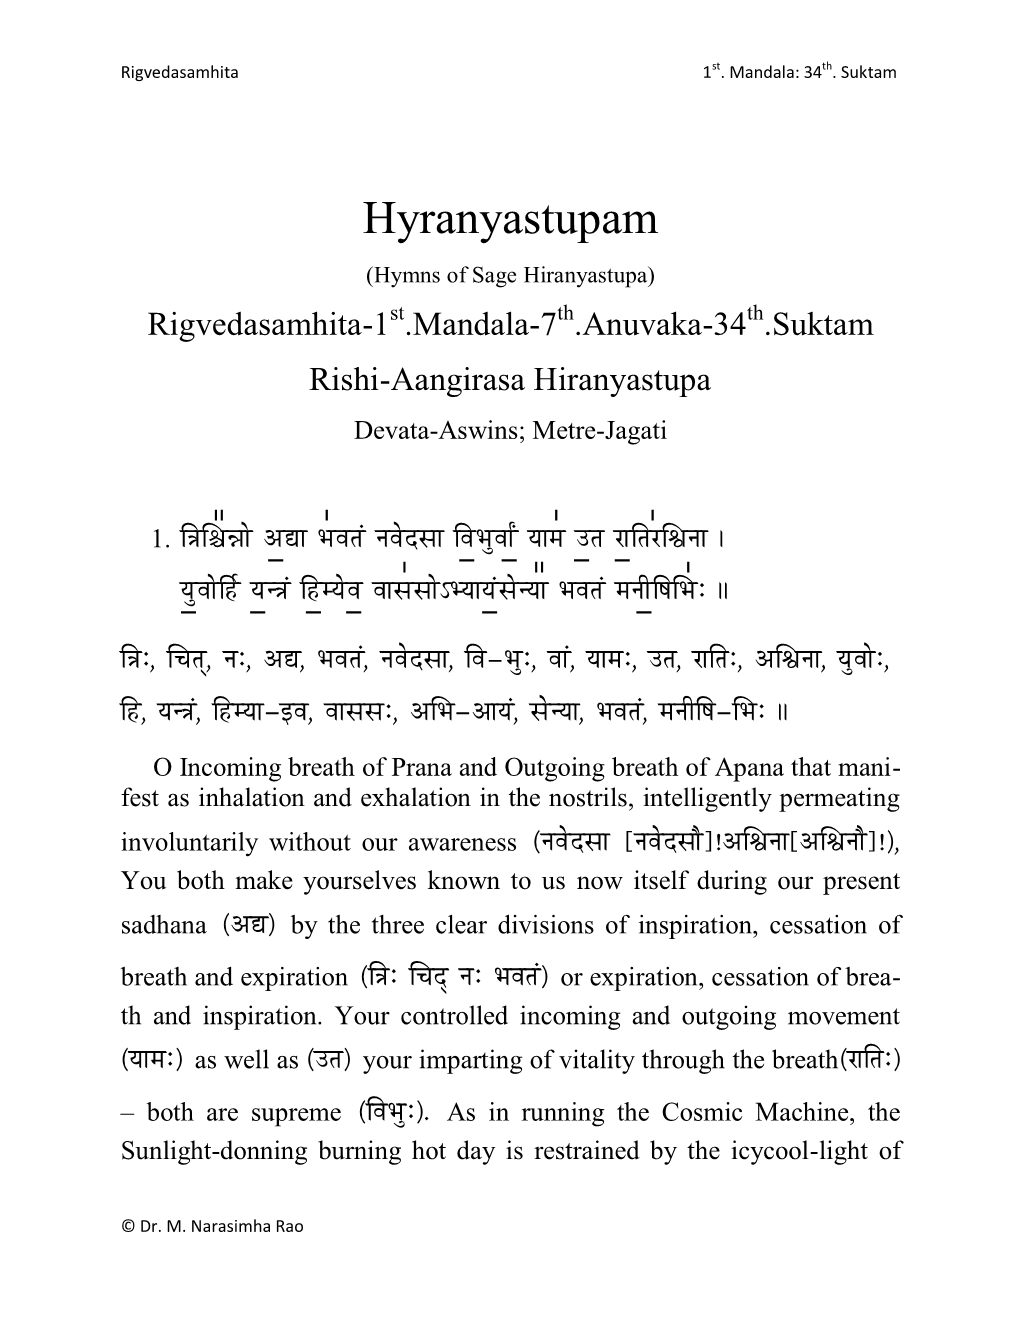 Hyranyastupam (Hymns of Sage Hiranyastupa) Rigvedasamhita-1St.Mandala-7Th.Anuvaka-34Th.Suktam Rishi-Aangirasa Hiranyastupa Devata-Aswins; Metre-Jagati